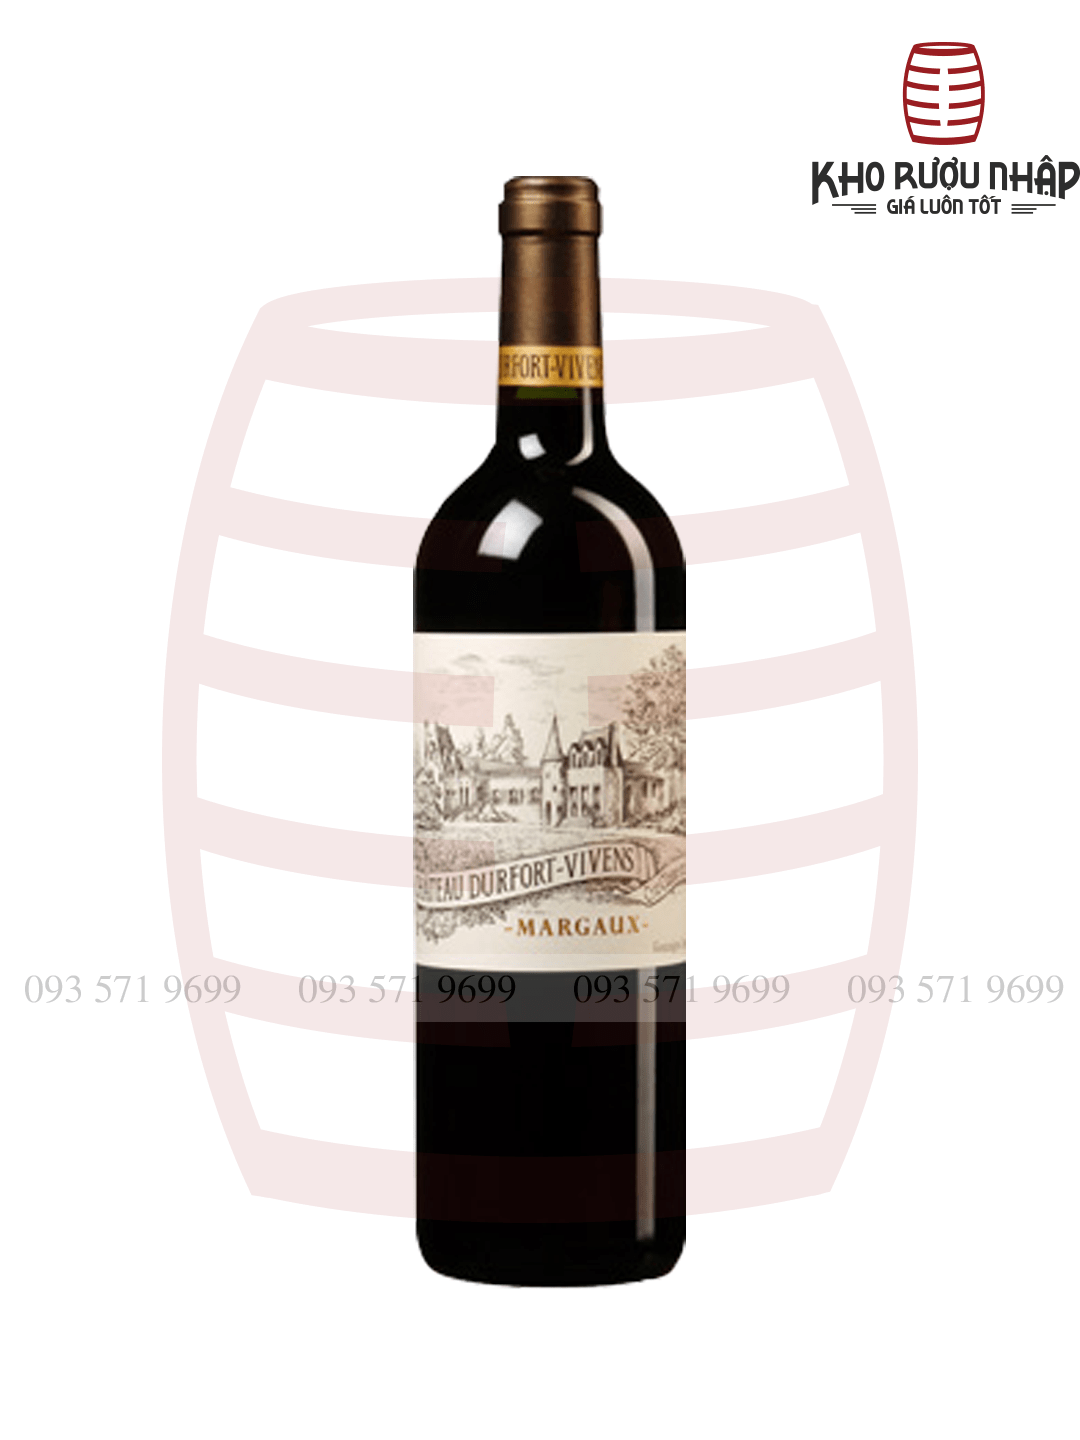 Rượu vang Pháp Chateau Durfort Vivens Grand Cru Classe En 1855 Margaux 2014 – HPW660